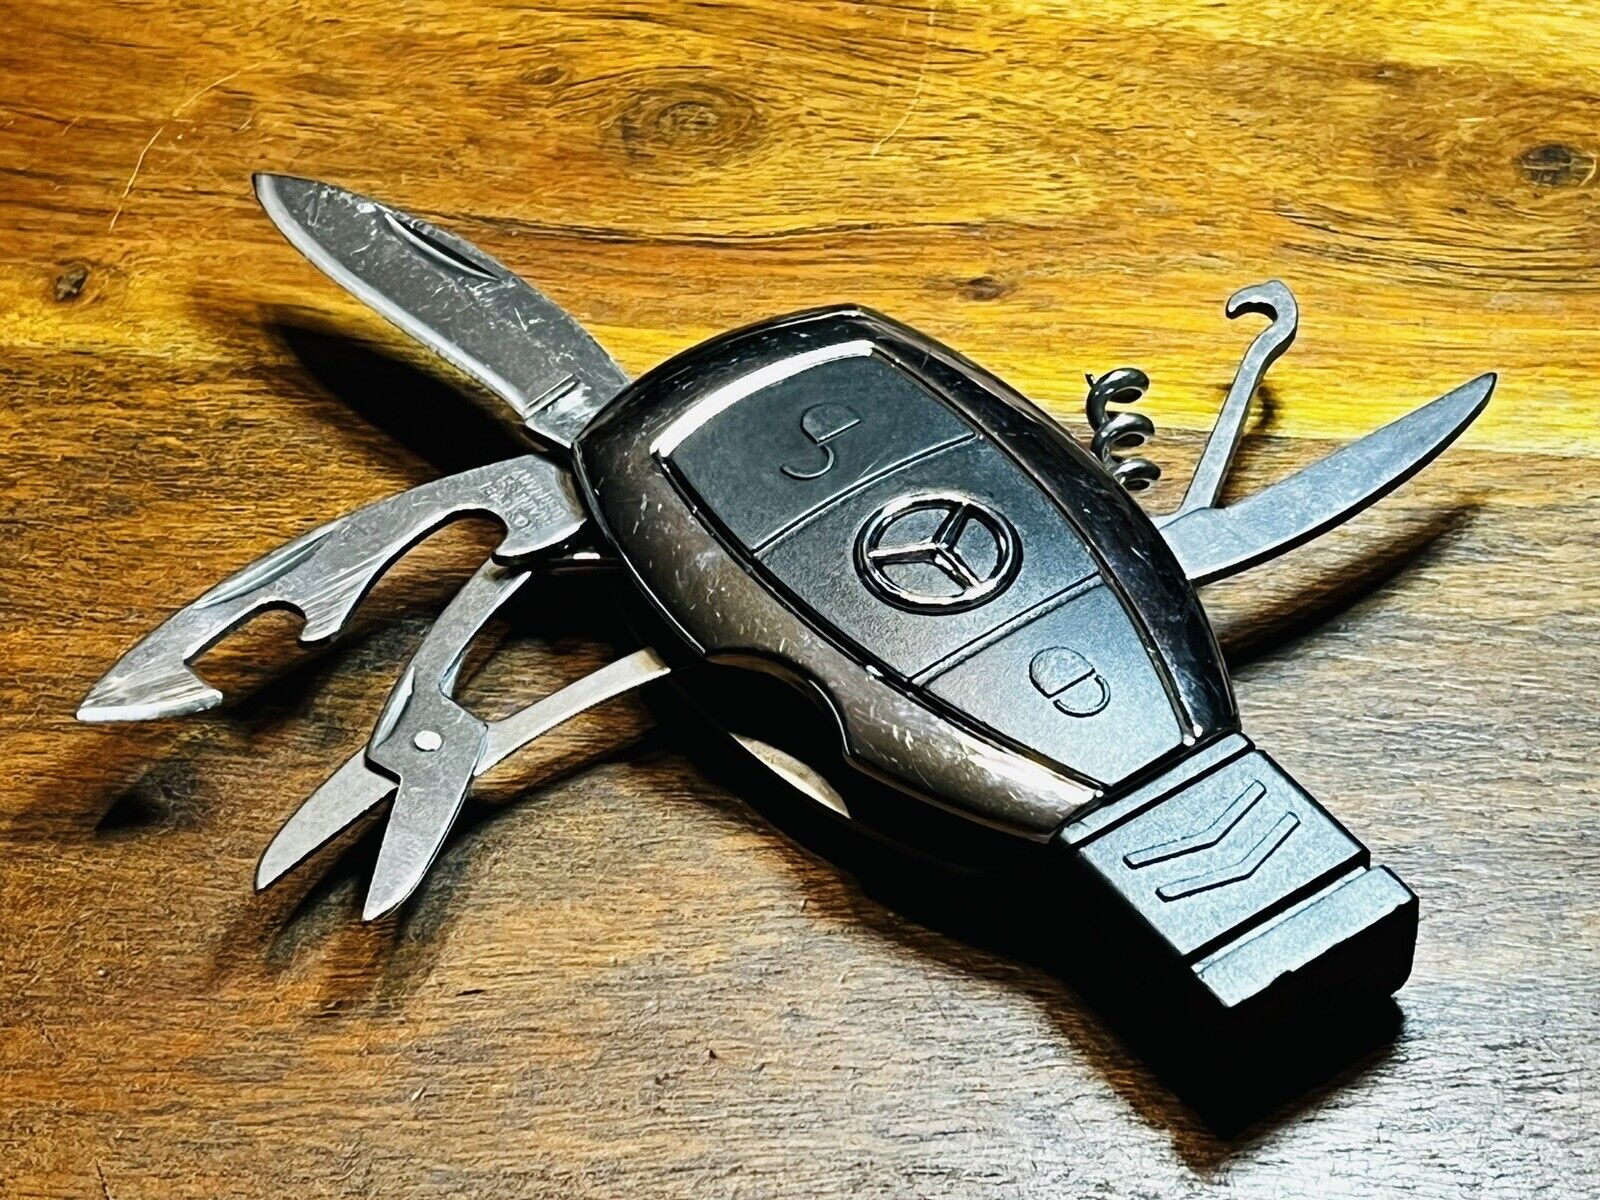 Limited Edition Mercedes-Benz Pocket Pnife  in key-form Flashlight